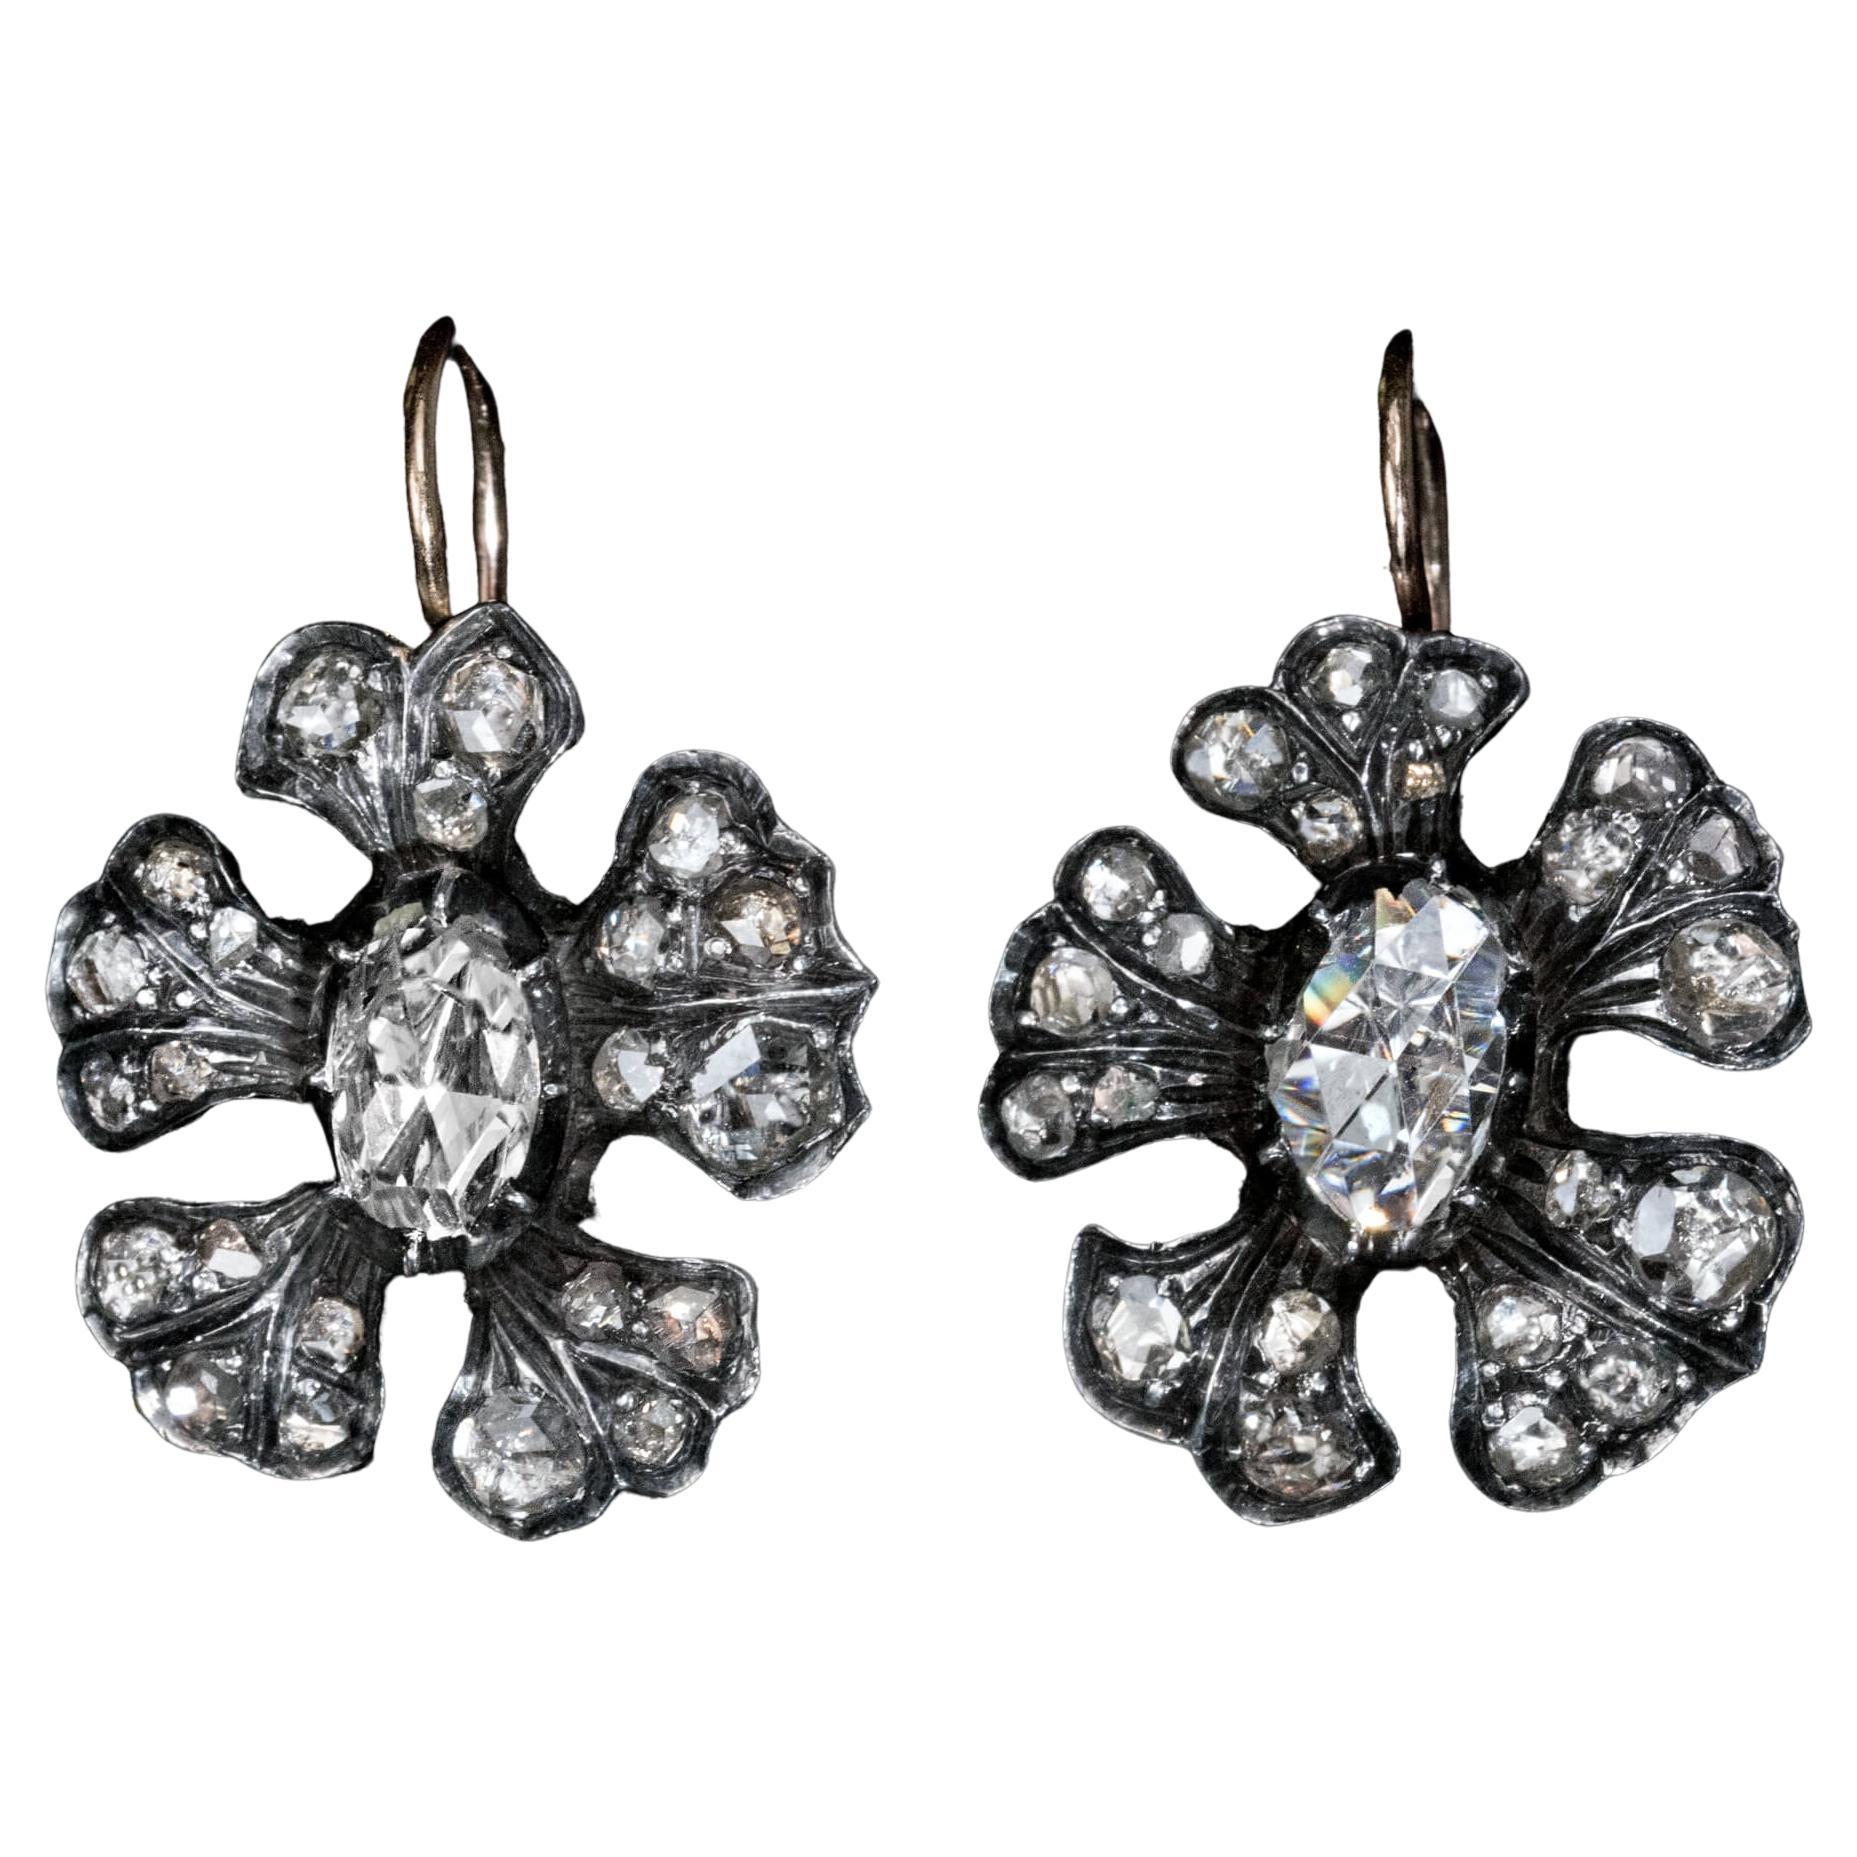 Antique Victorian Era Rose Cut Diamond Earrings